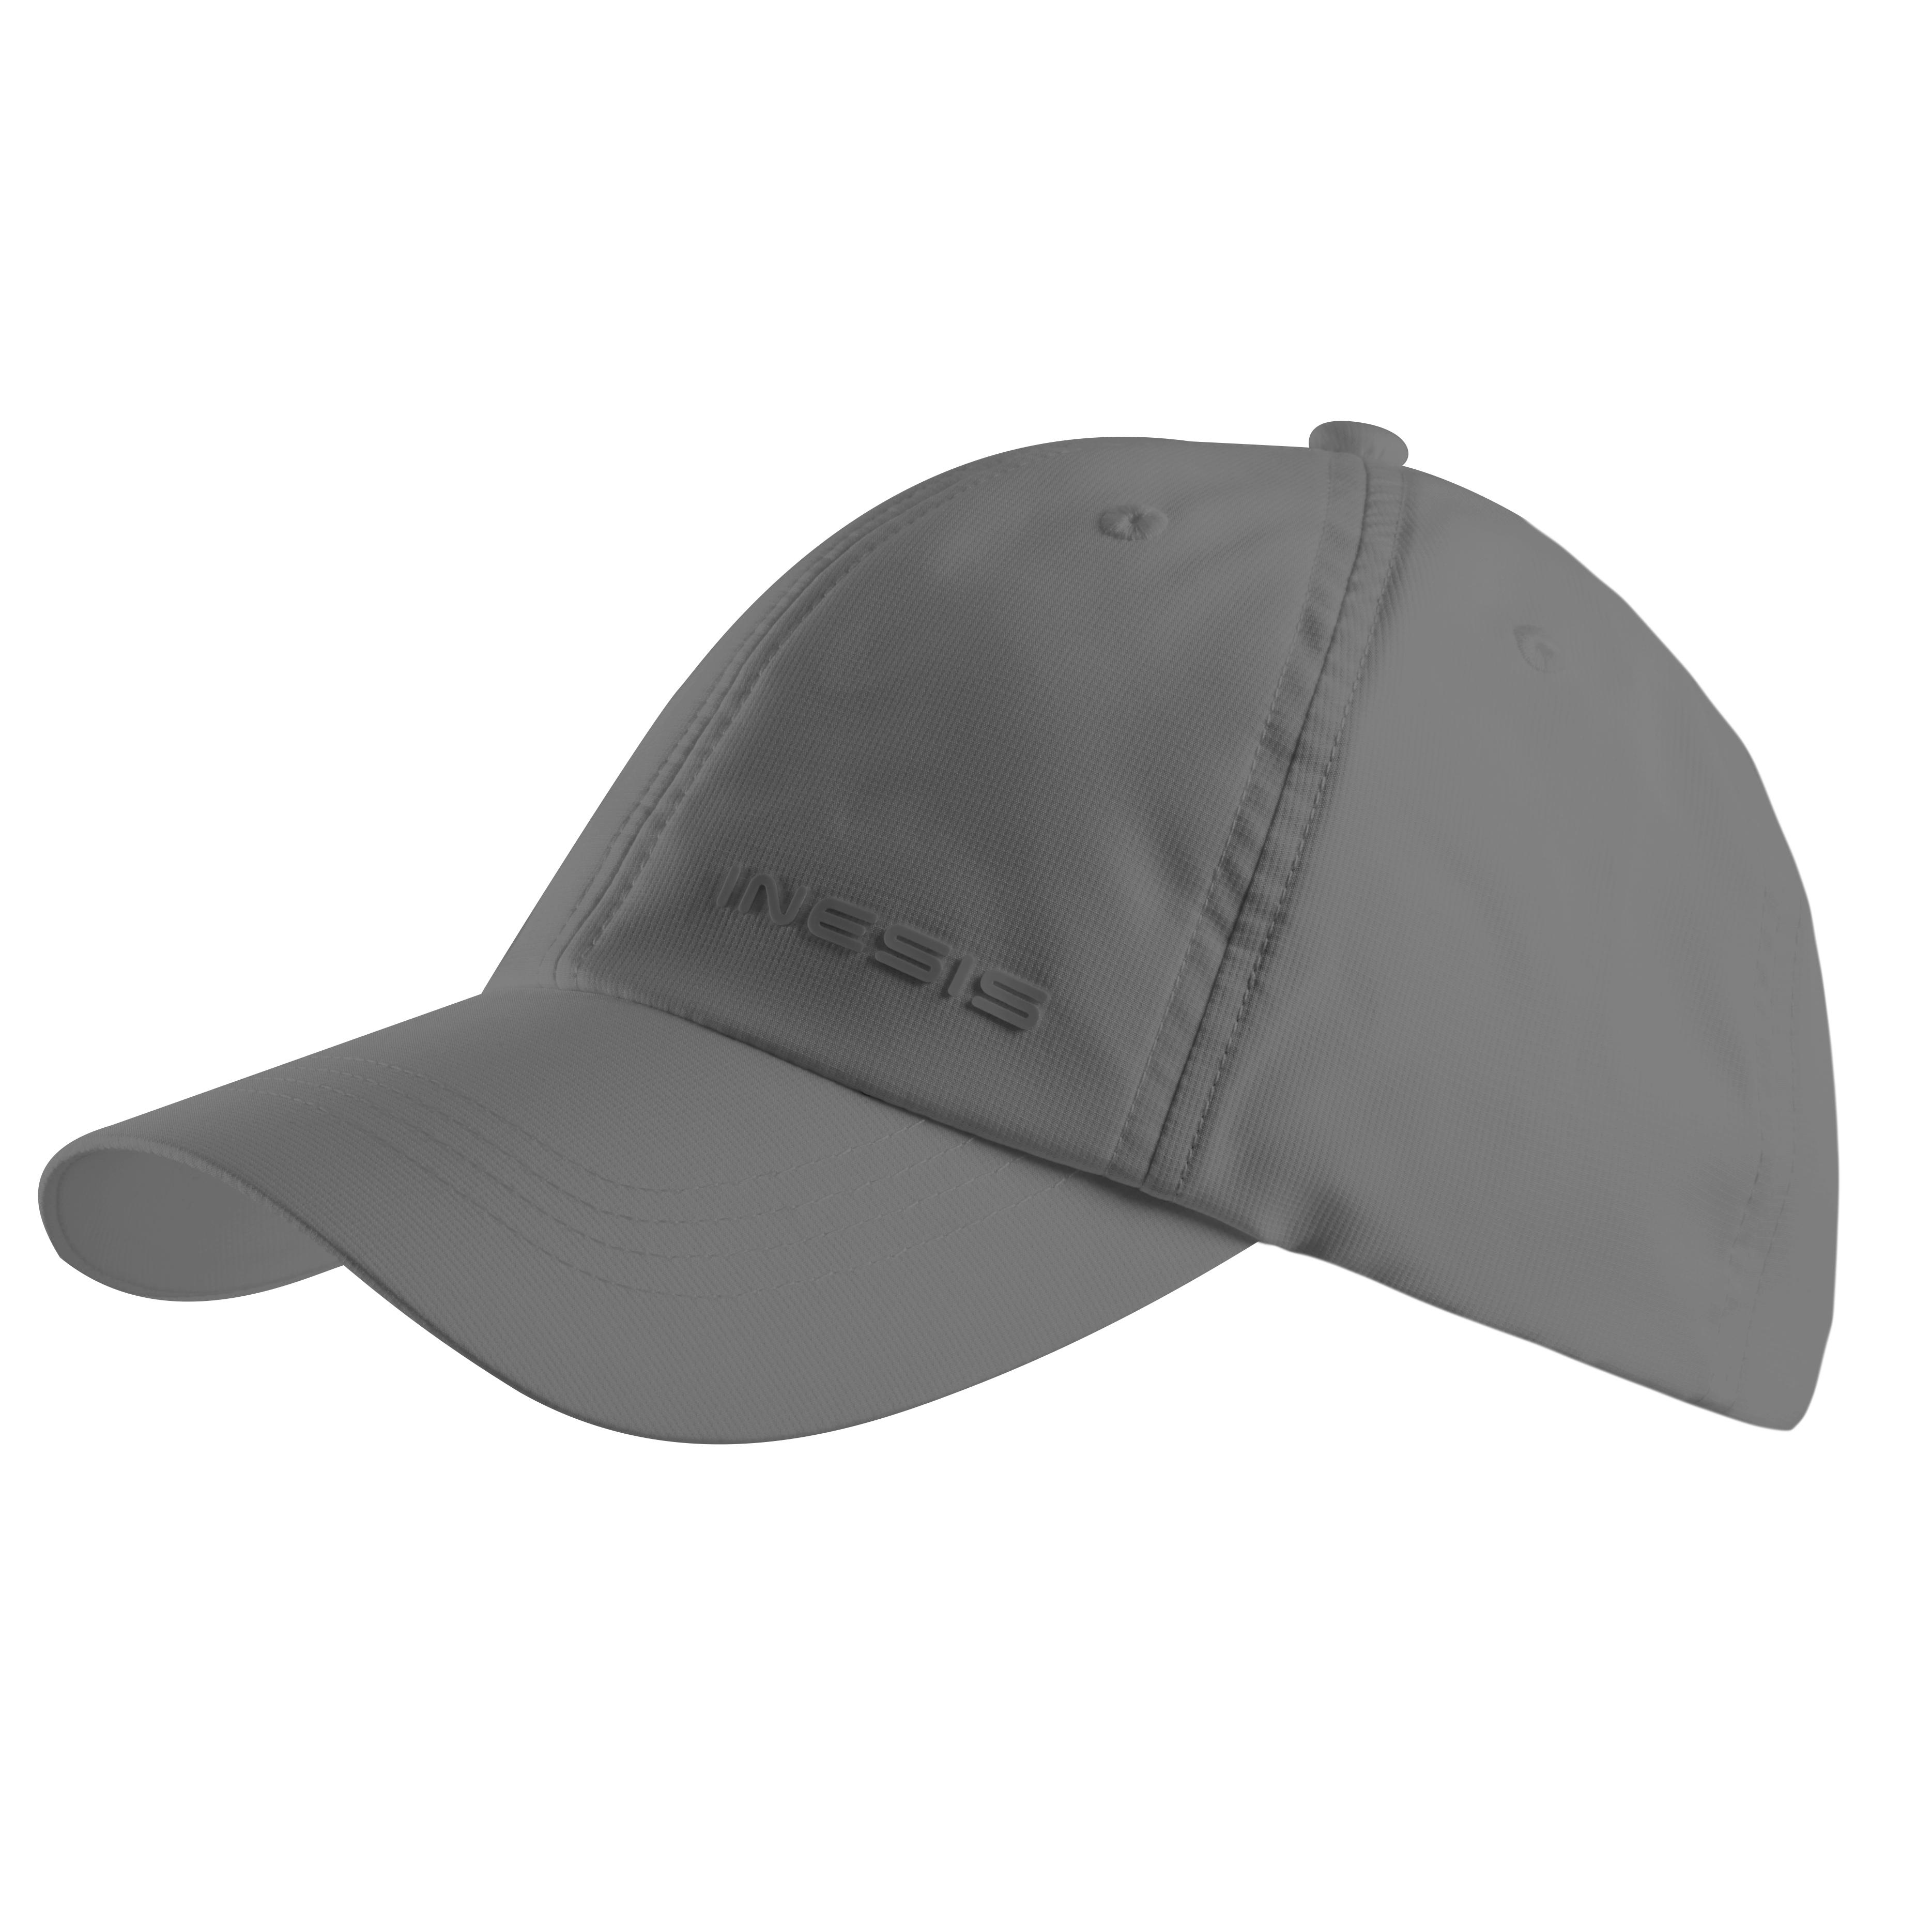 Adult's golf cap - WW 500 blue